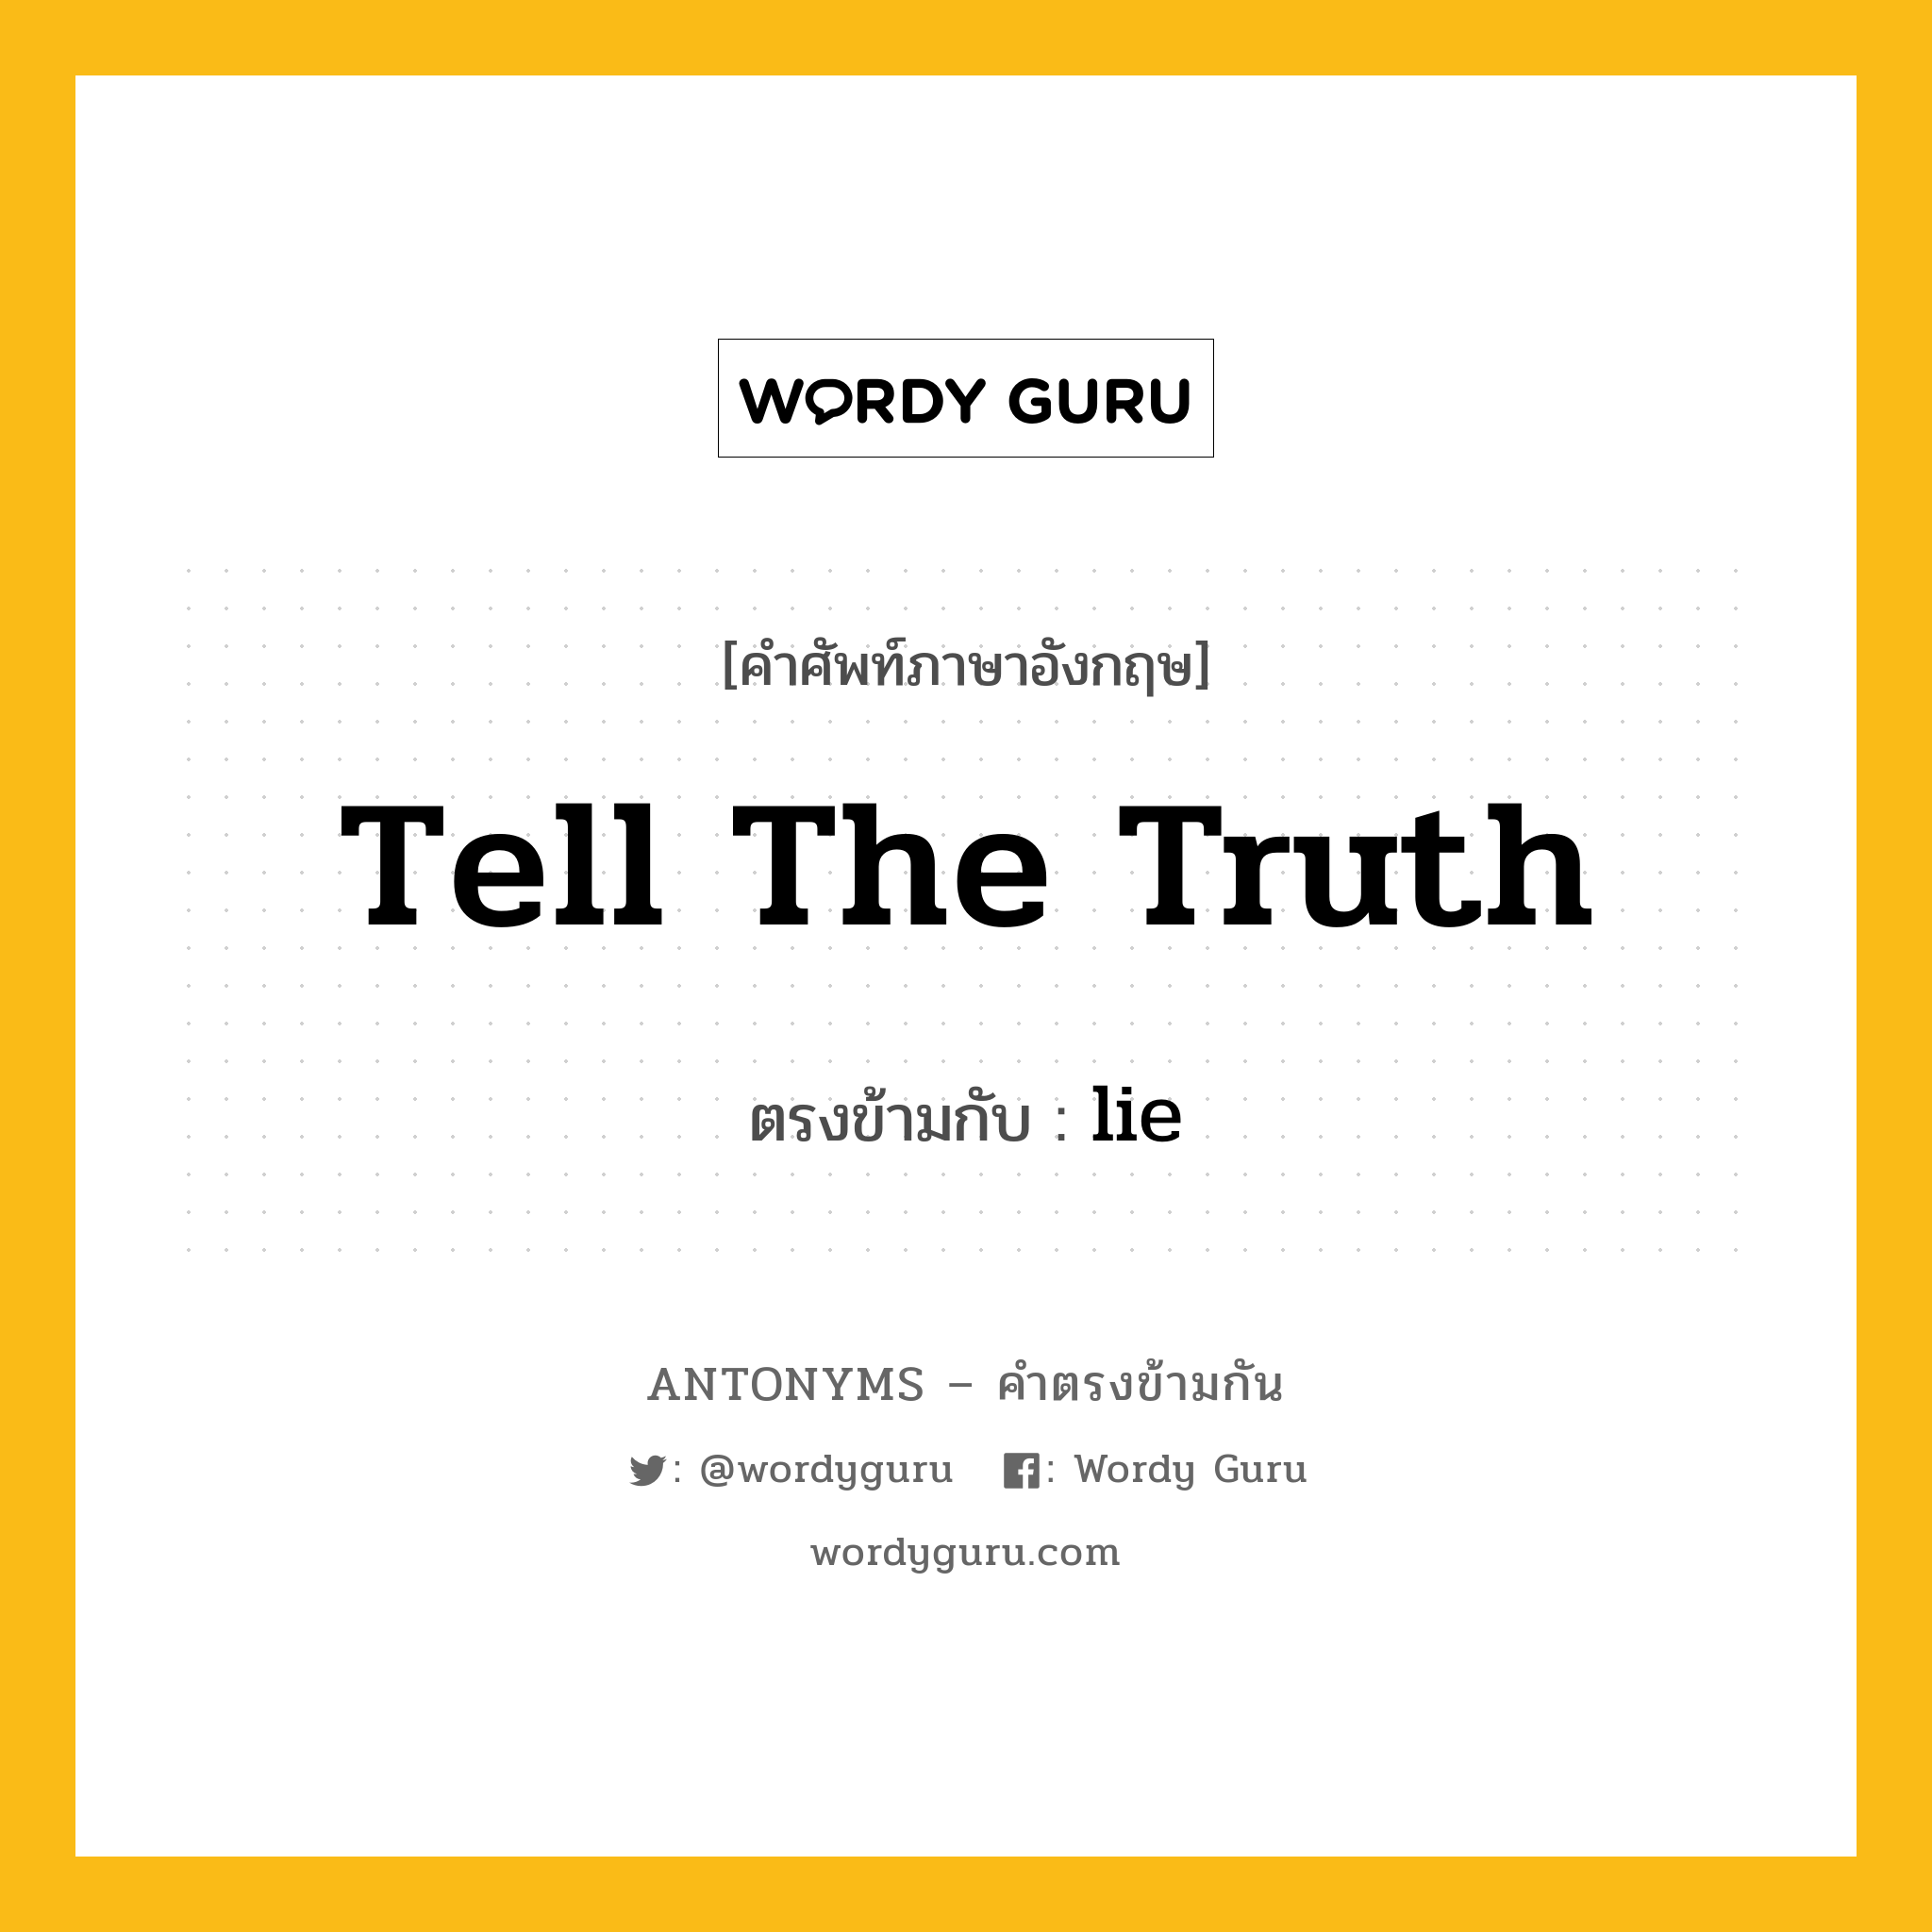 tell the truth เป็นคำตรงข้ามกับคำไหนบ้าง?, คำศัพท์ภาษาอังกฤษ tell the truth ตรงข้ามกับ lie หมวด lie